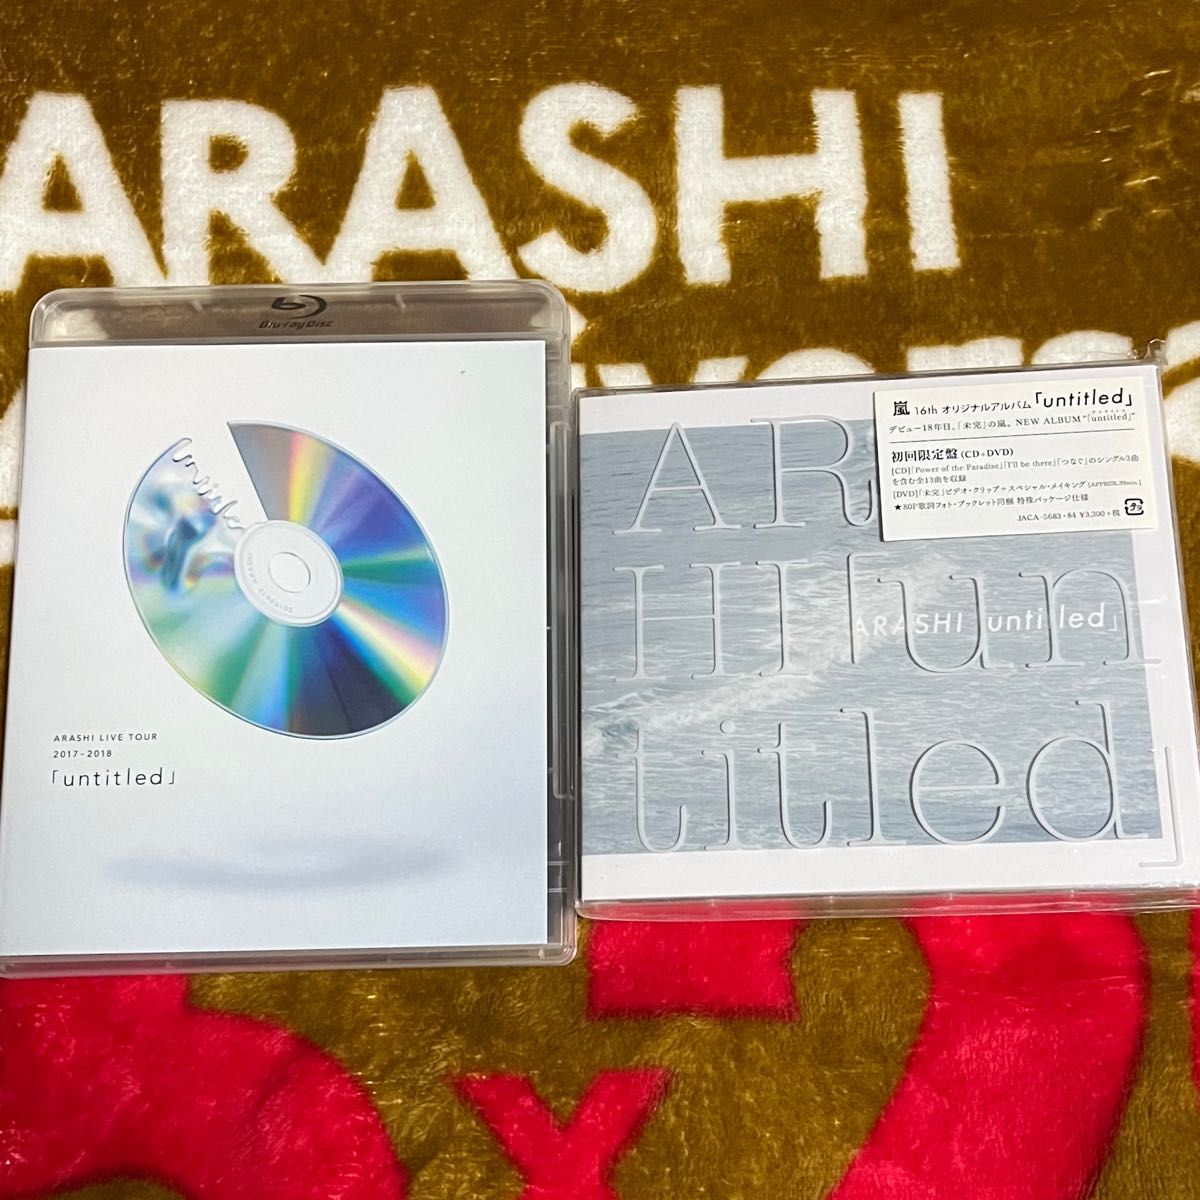 嵐/ARASHI LIVE TOUR 2017-2018「untitled」 通常盤Blu-ray 初回限定盤CD